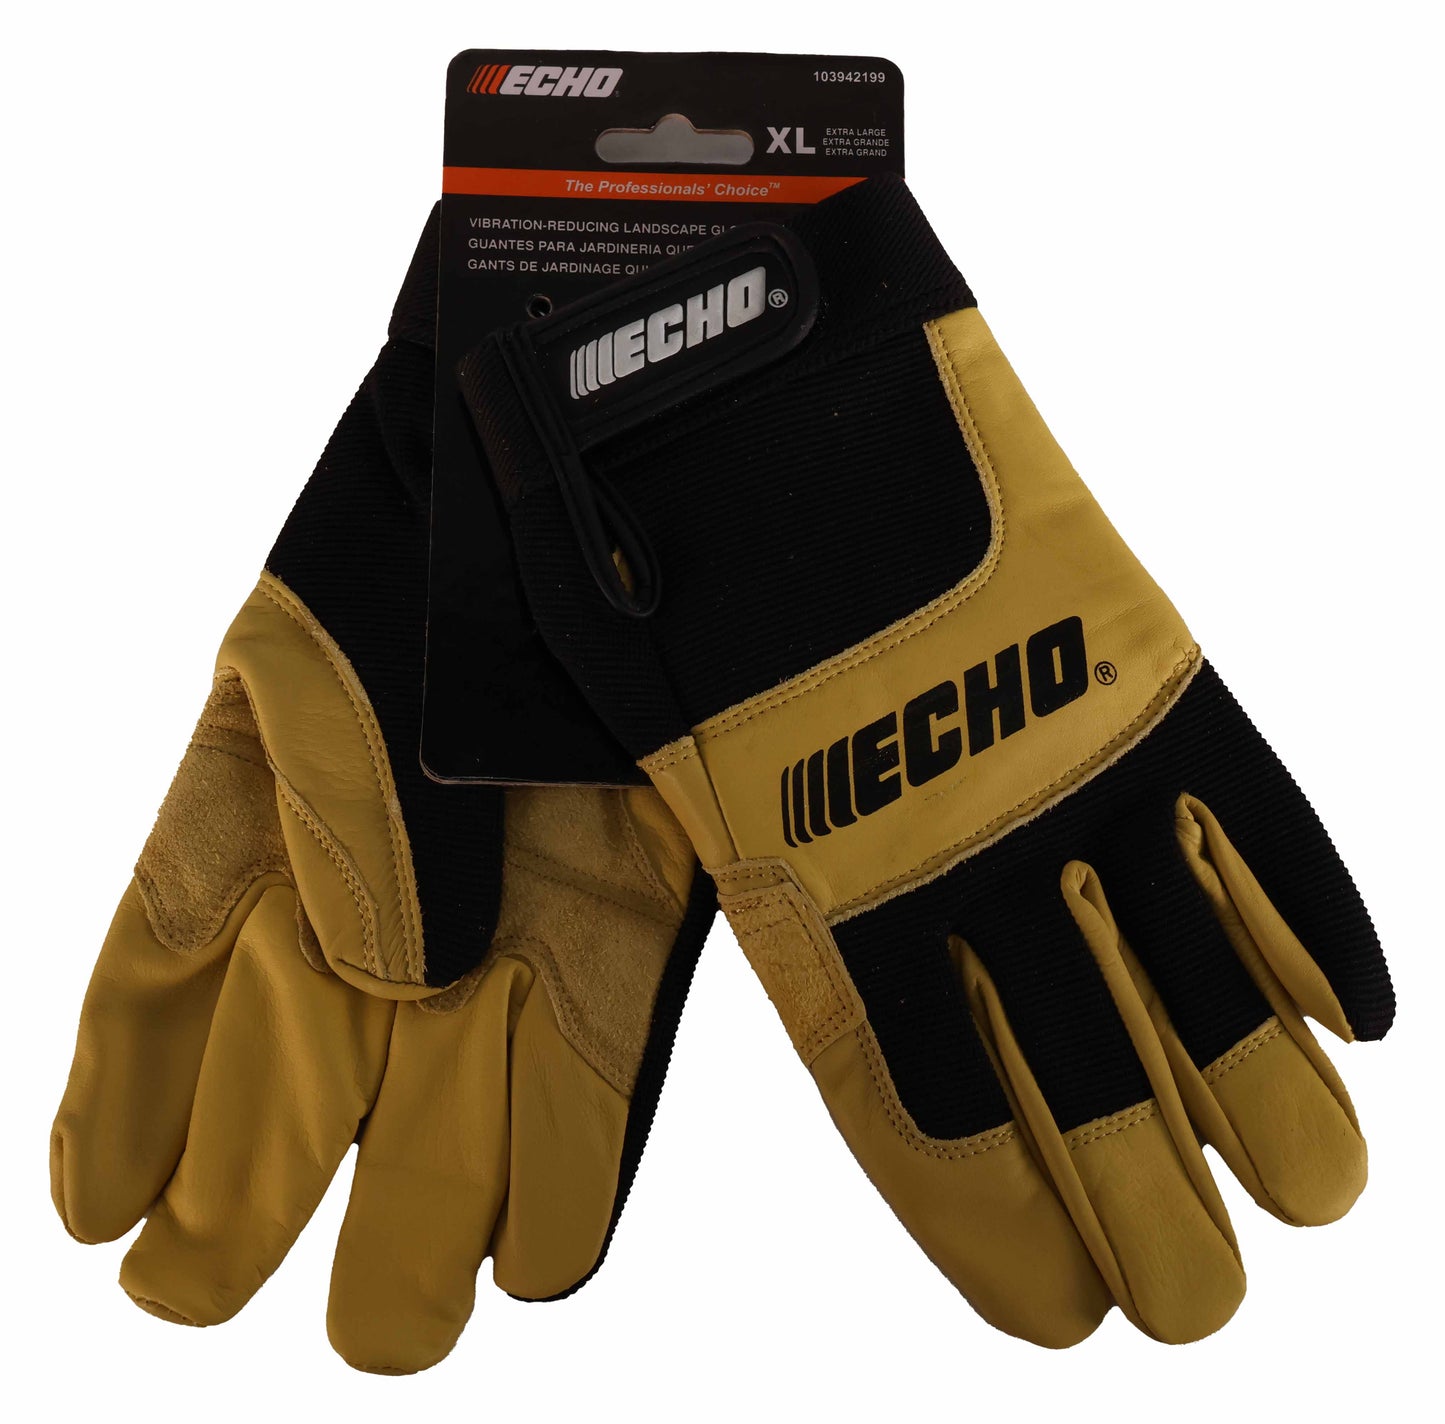 Echo Original Equipment Vibration-Reducing Landscape Gloves (X-Large) - 103942199